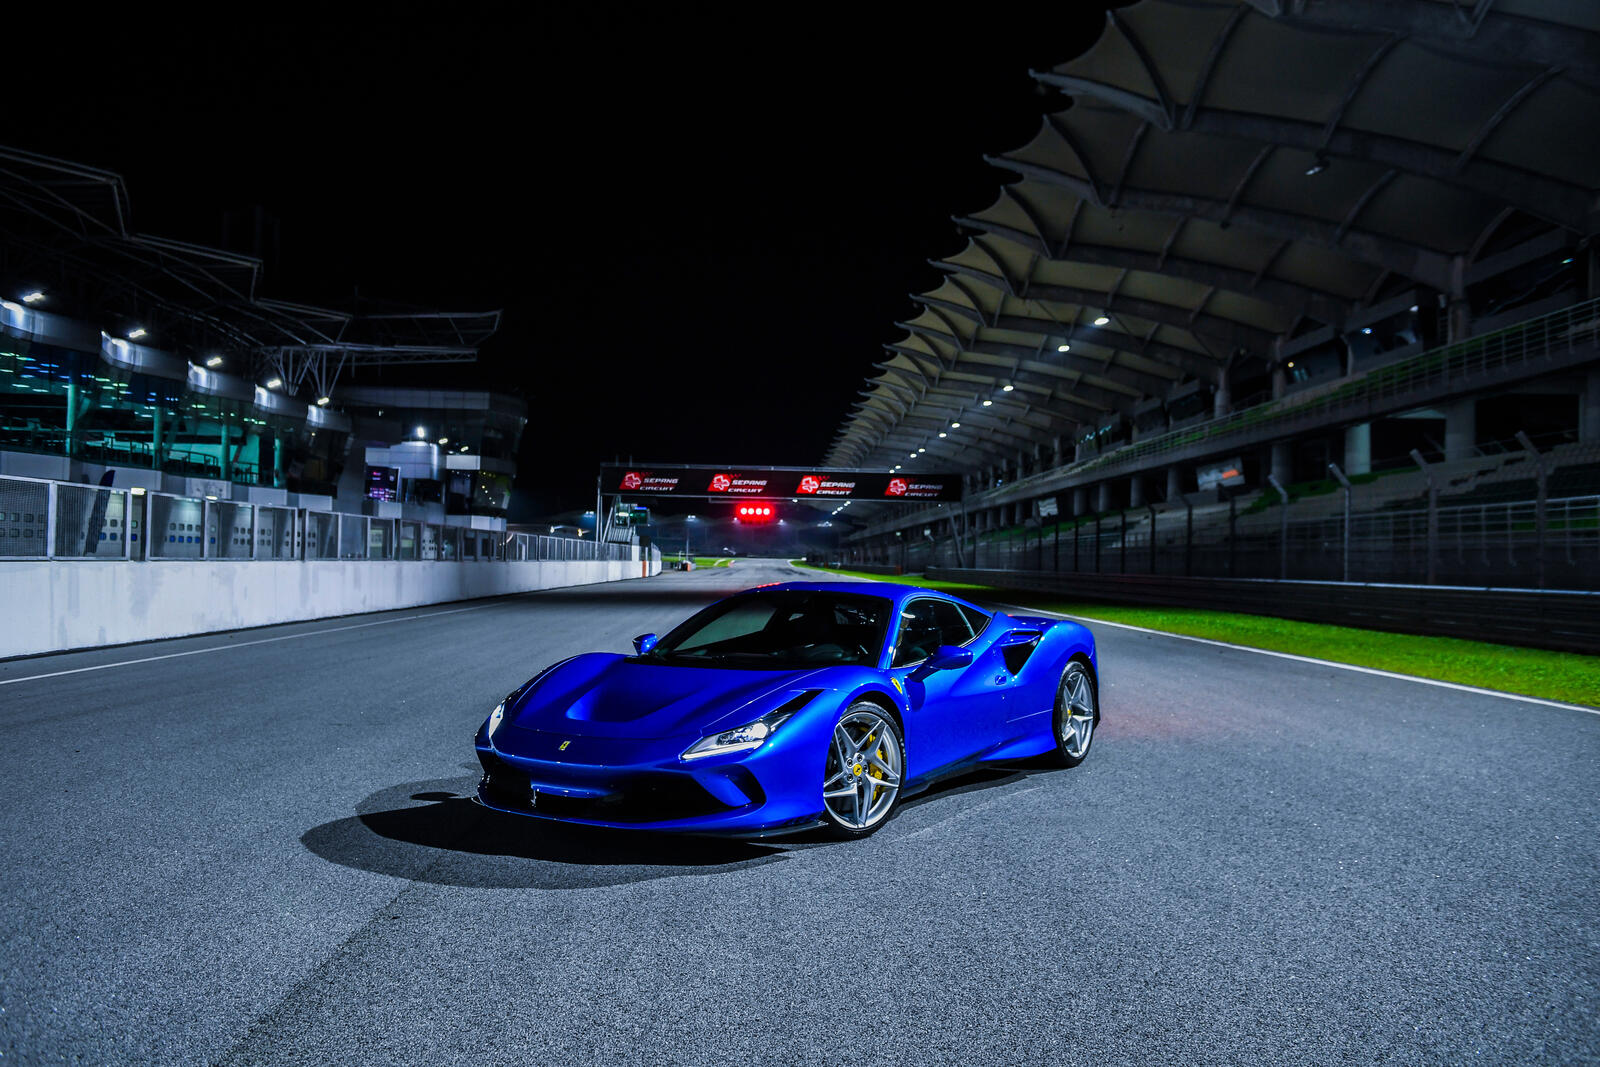 Бесплатное фото Ferrari F8 Tributo в синем цвете